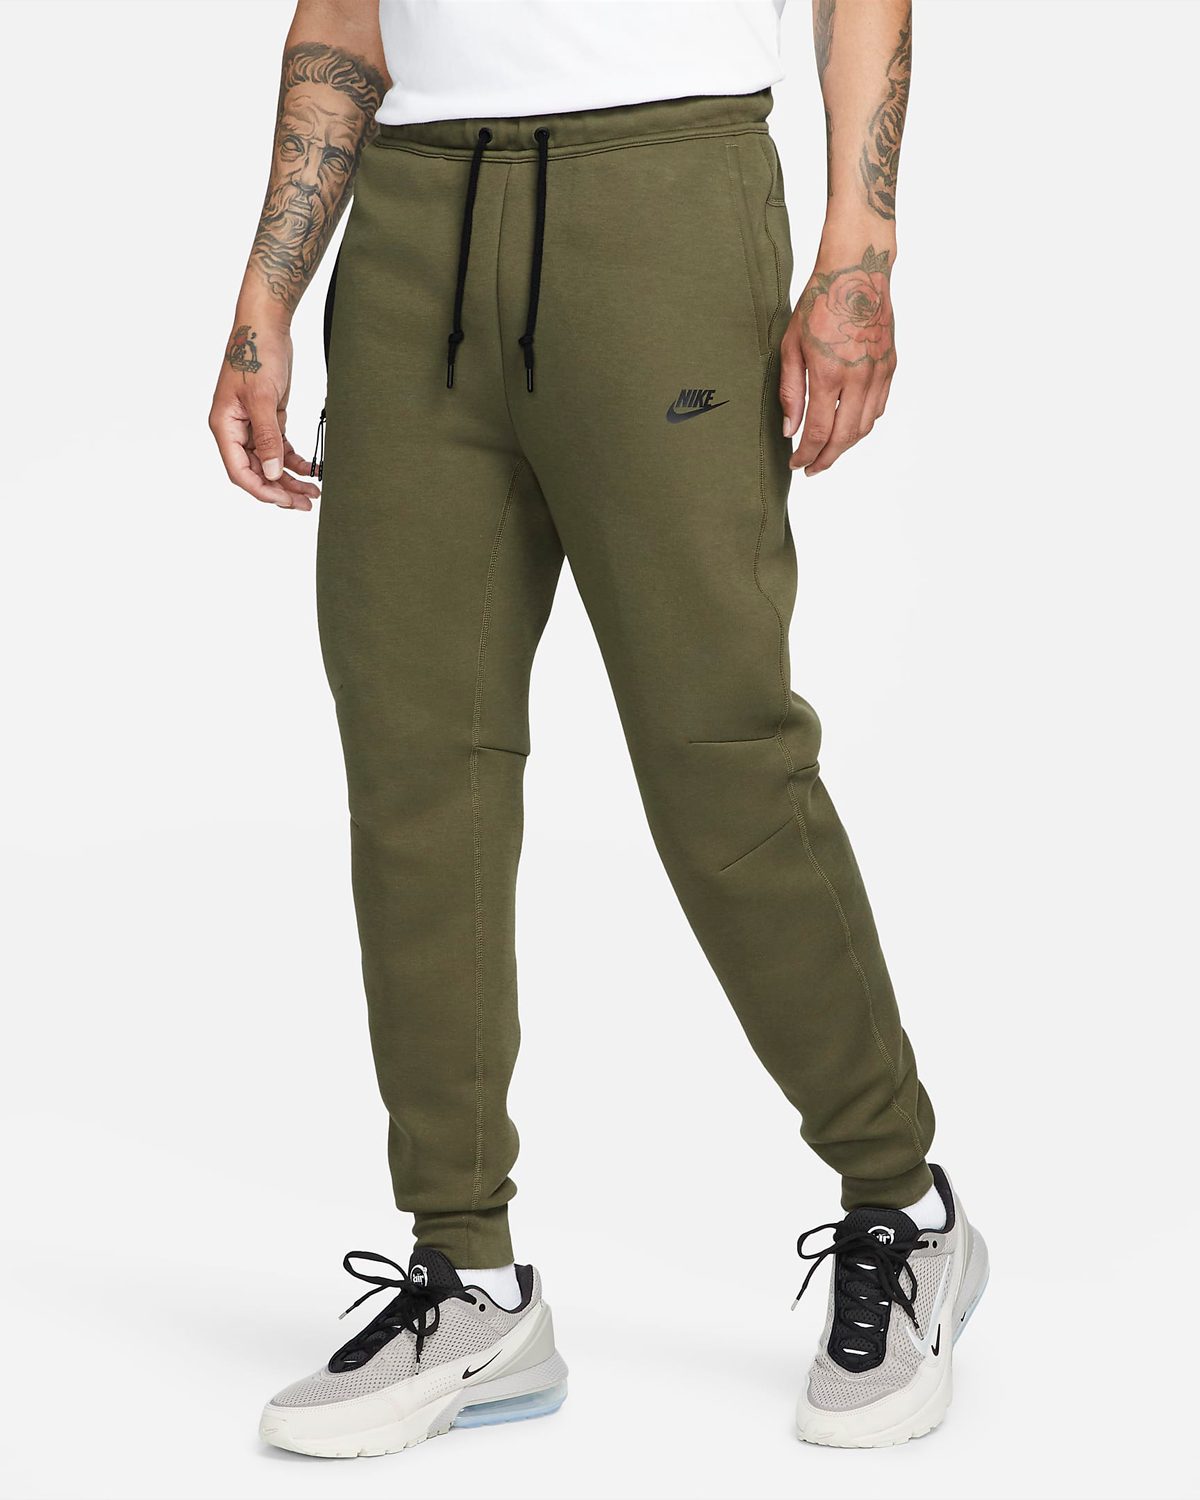 Nike-Tech-Fleece-Joggers-Medium-Olive-Green